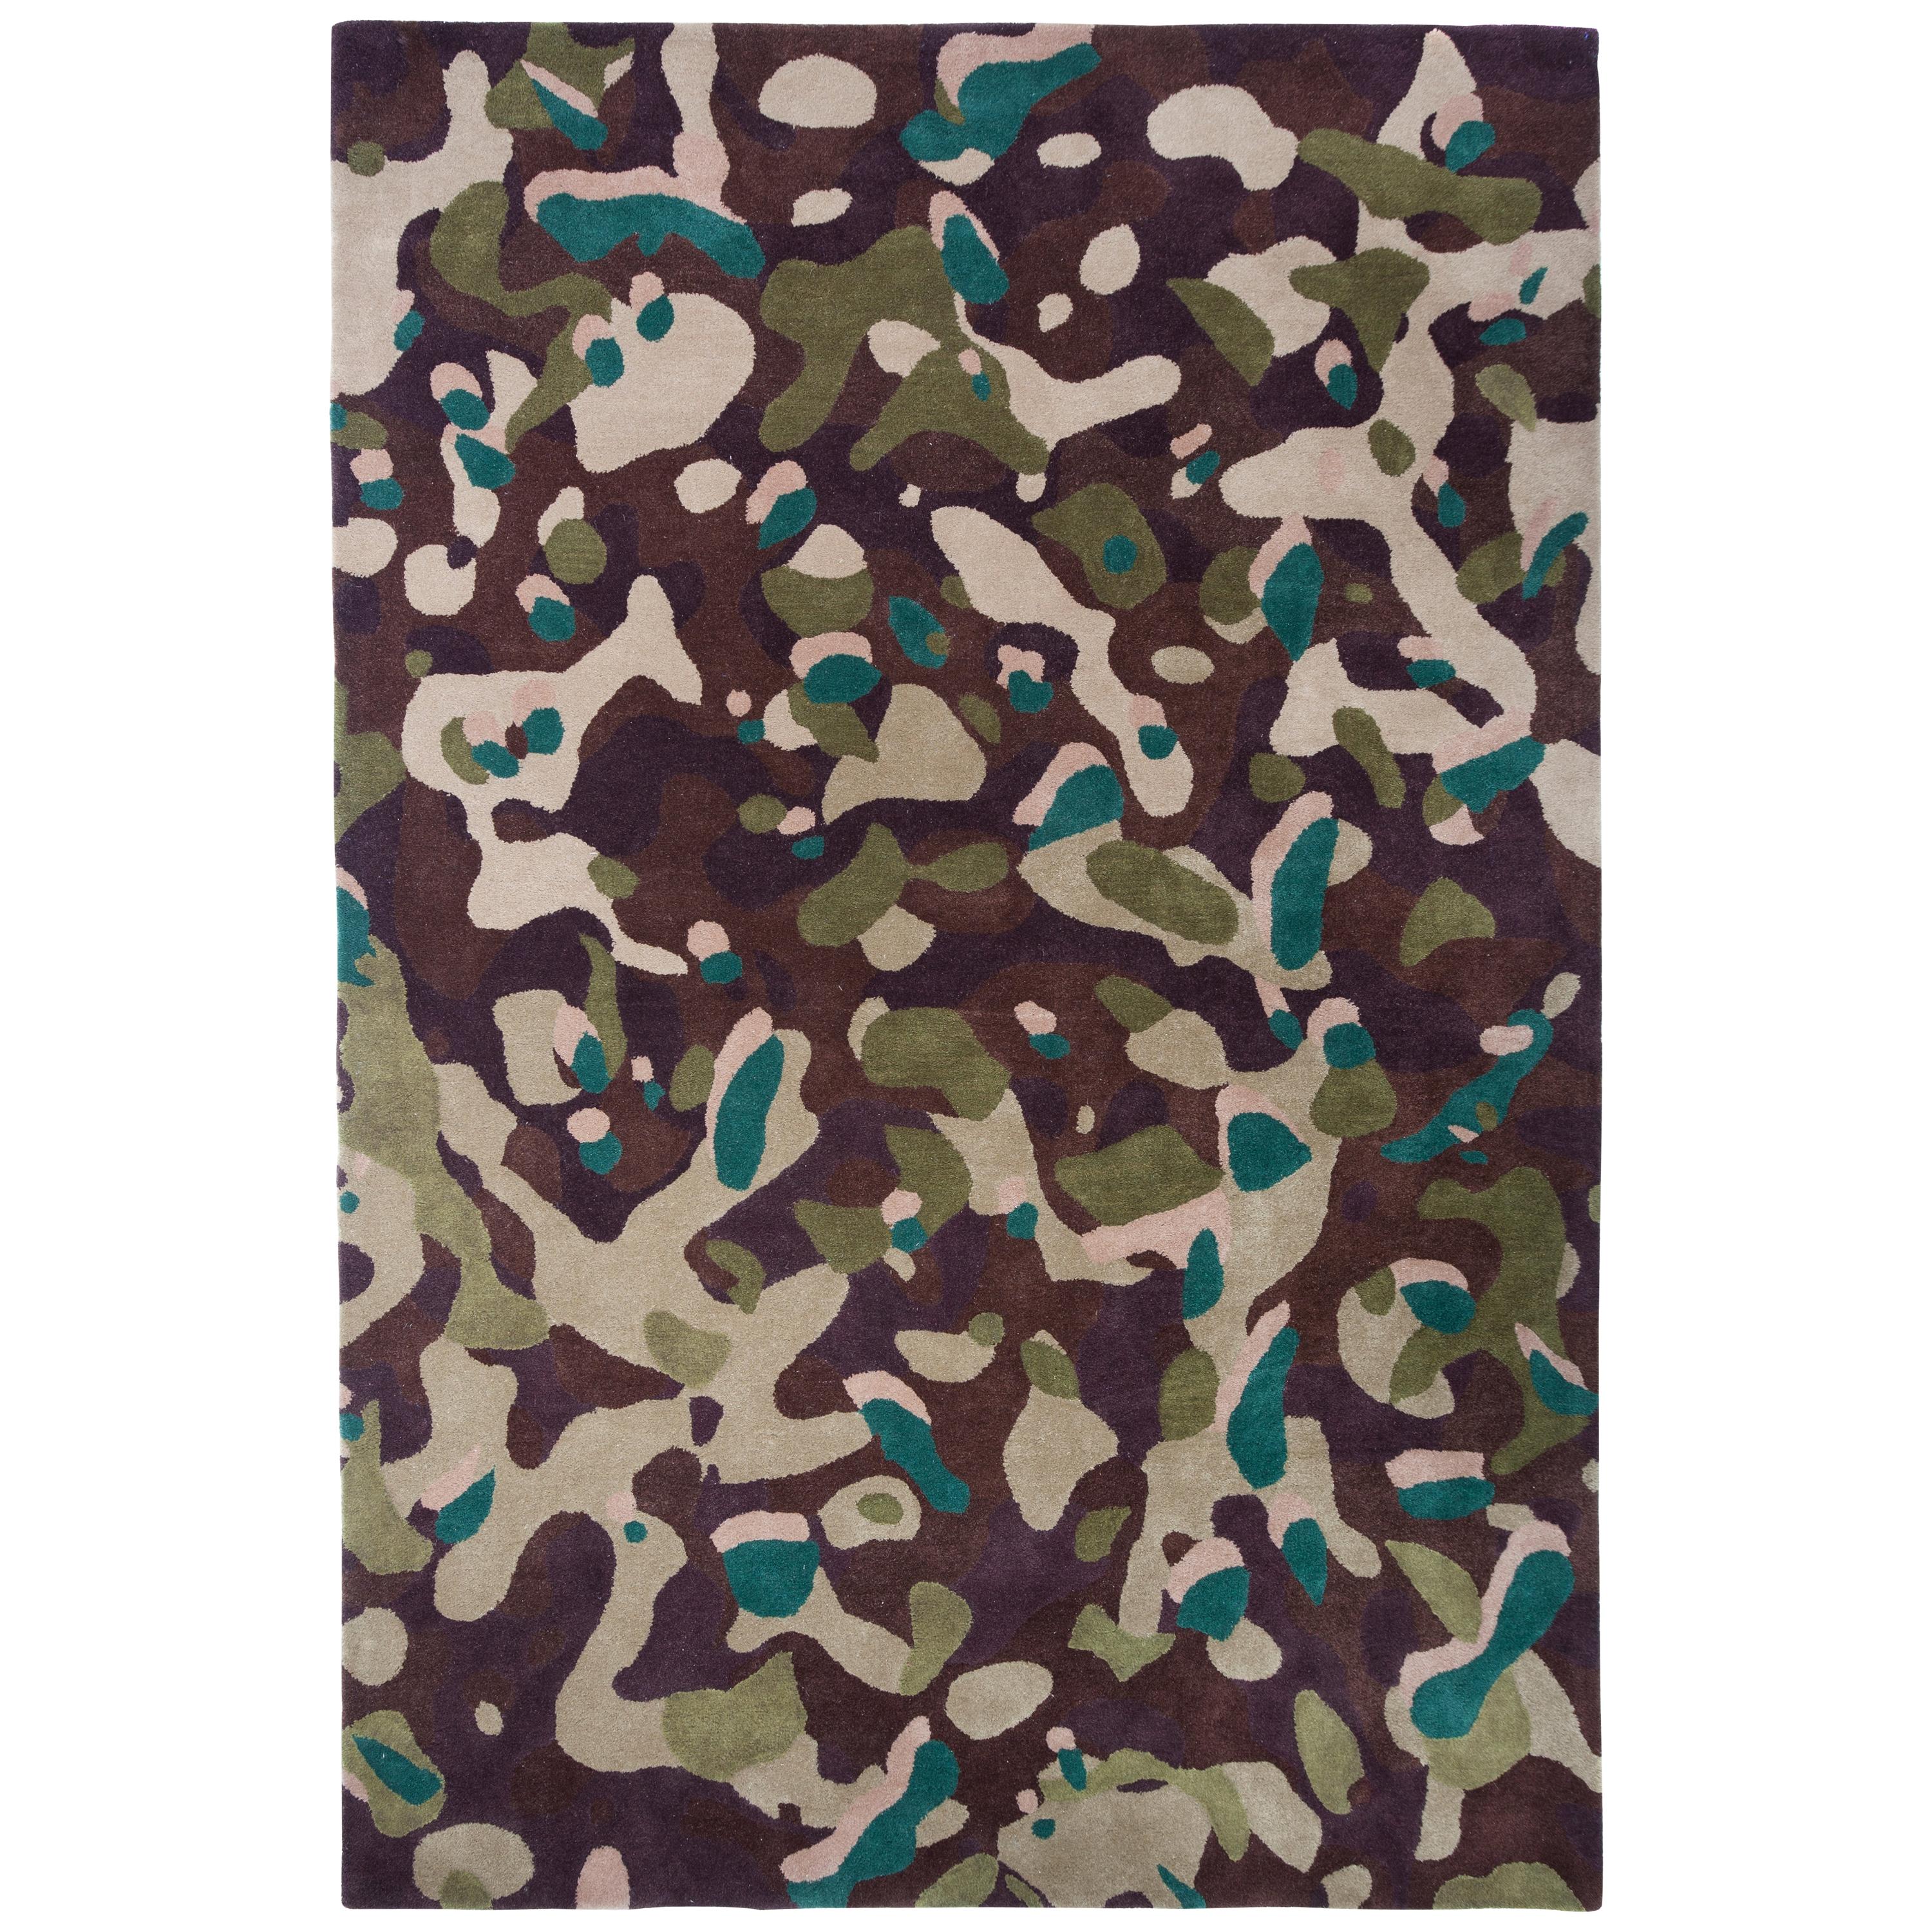 Camouflage Macro, Handtufted, Wool and Viscose, Alberto Artesani For Sale